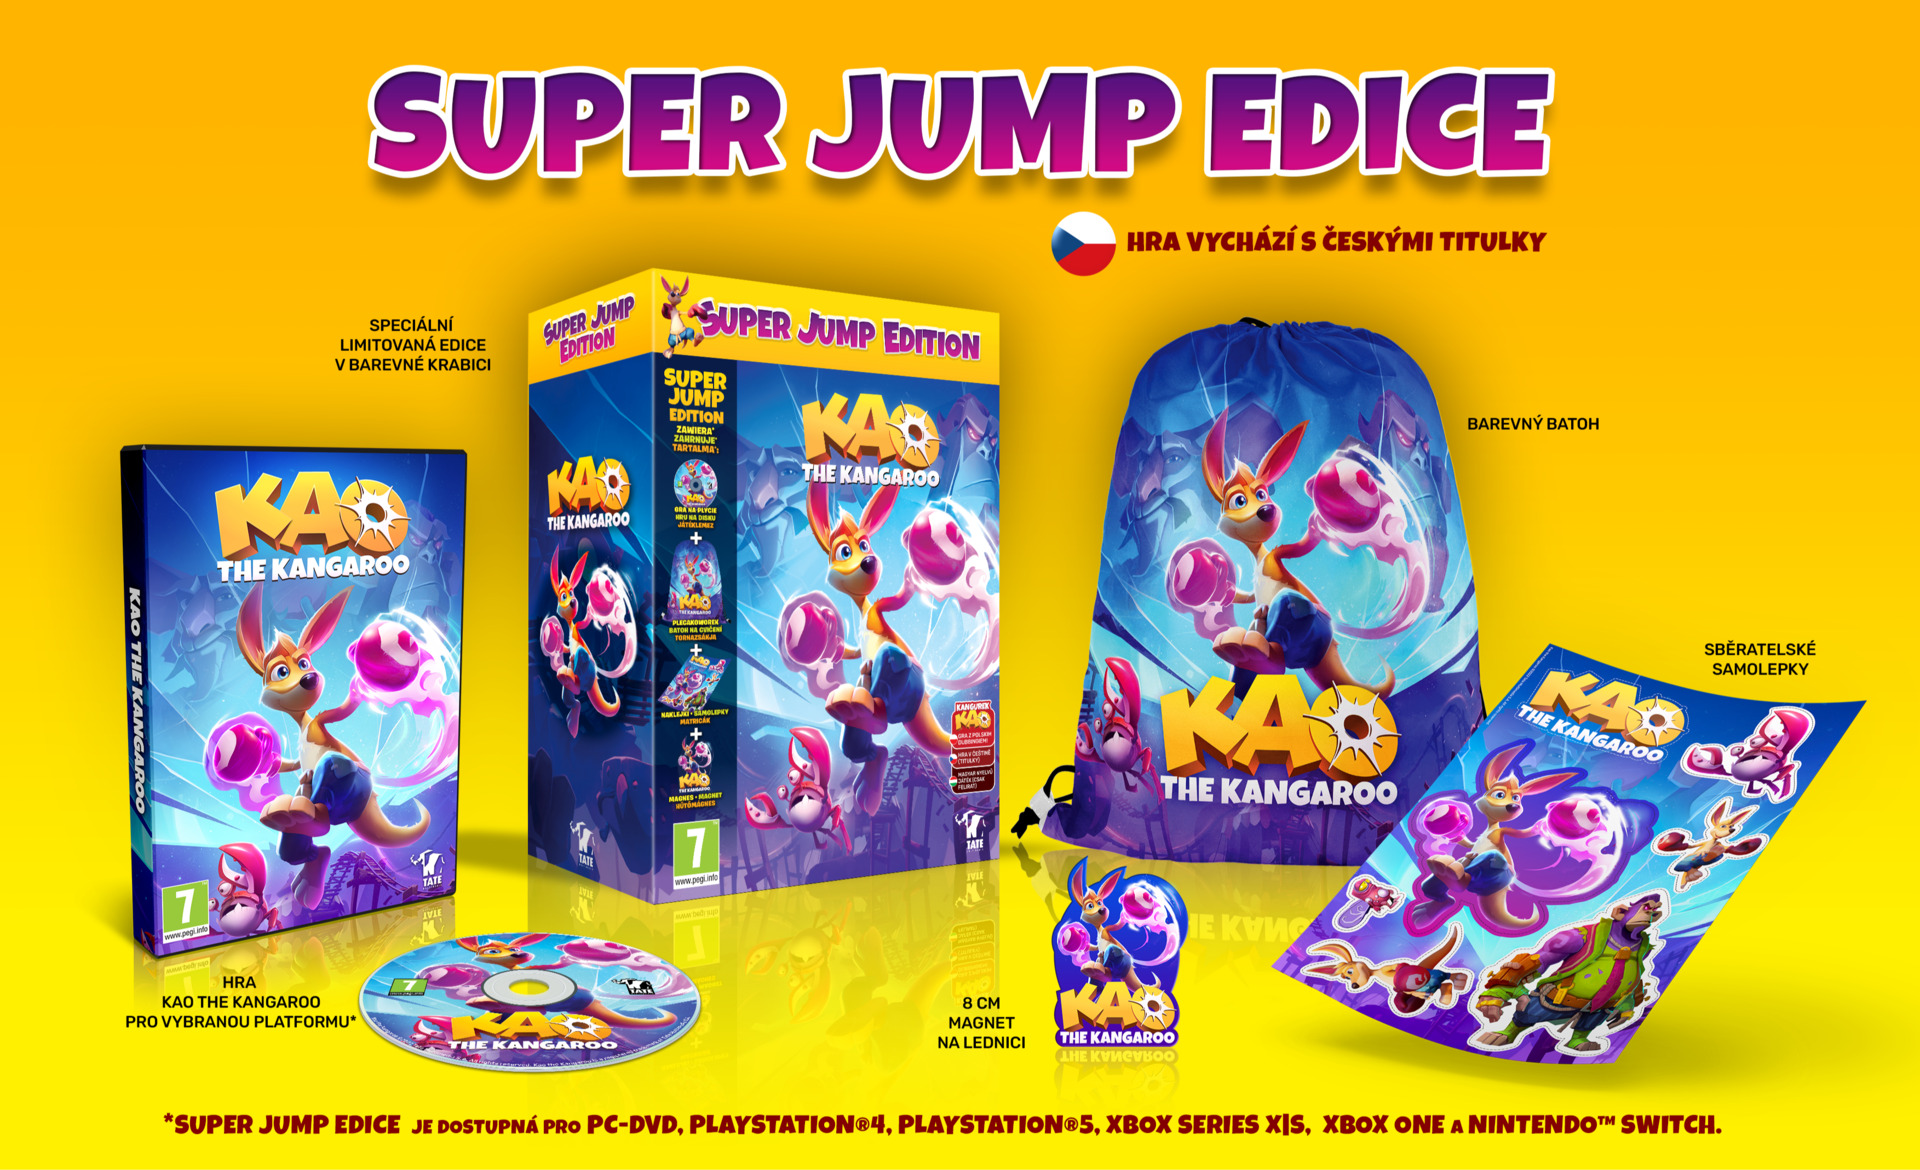 Kao the Kangaroo - Super Jump Edition (PS4)